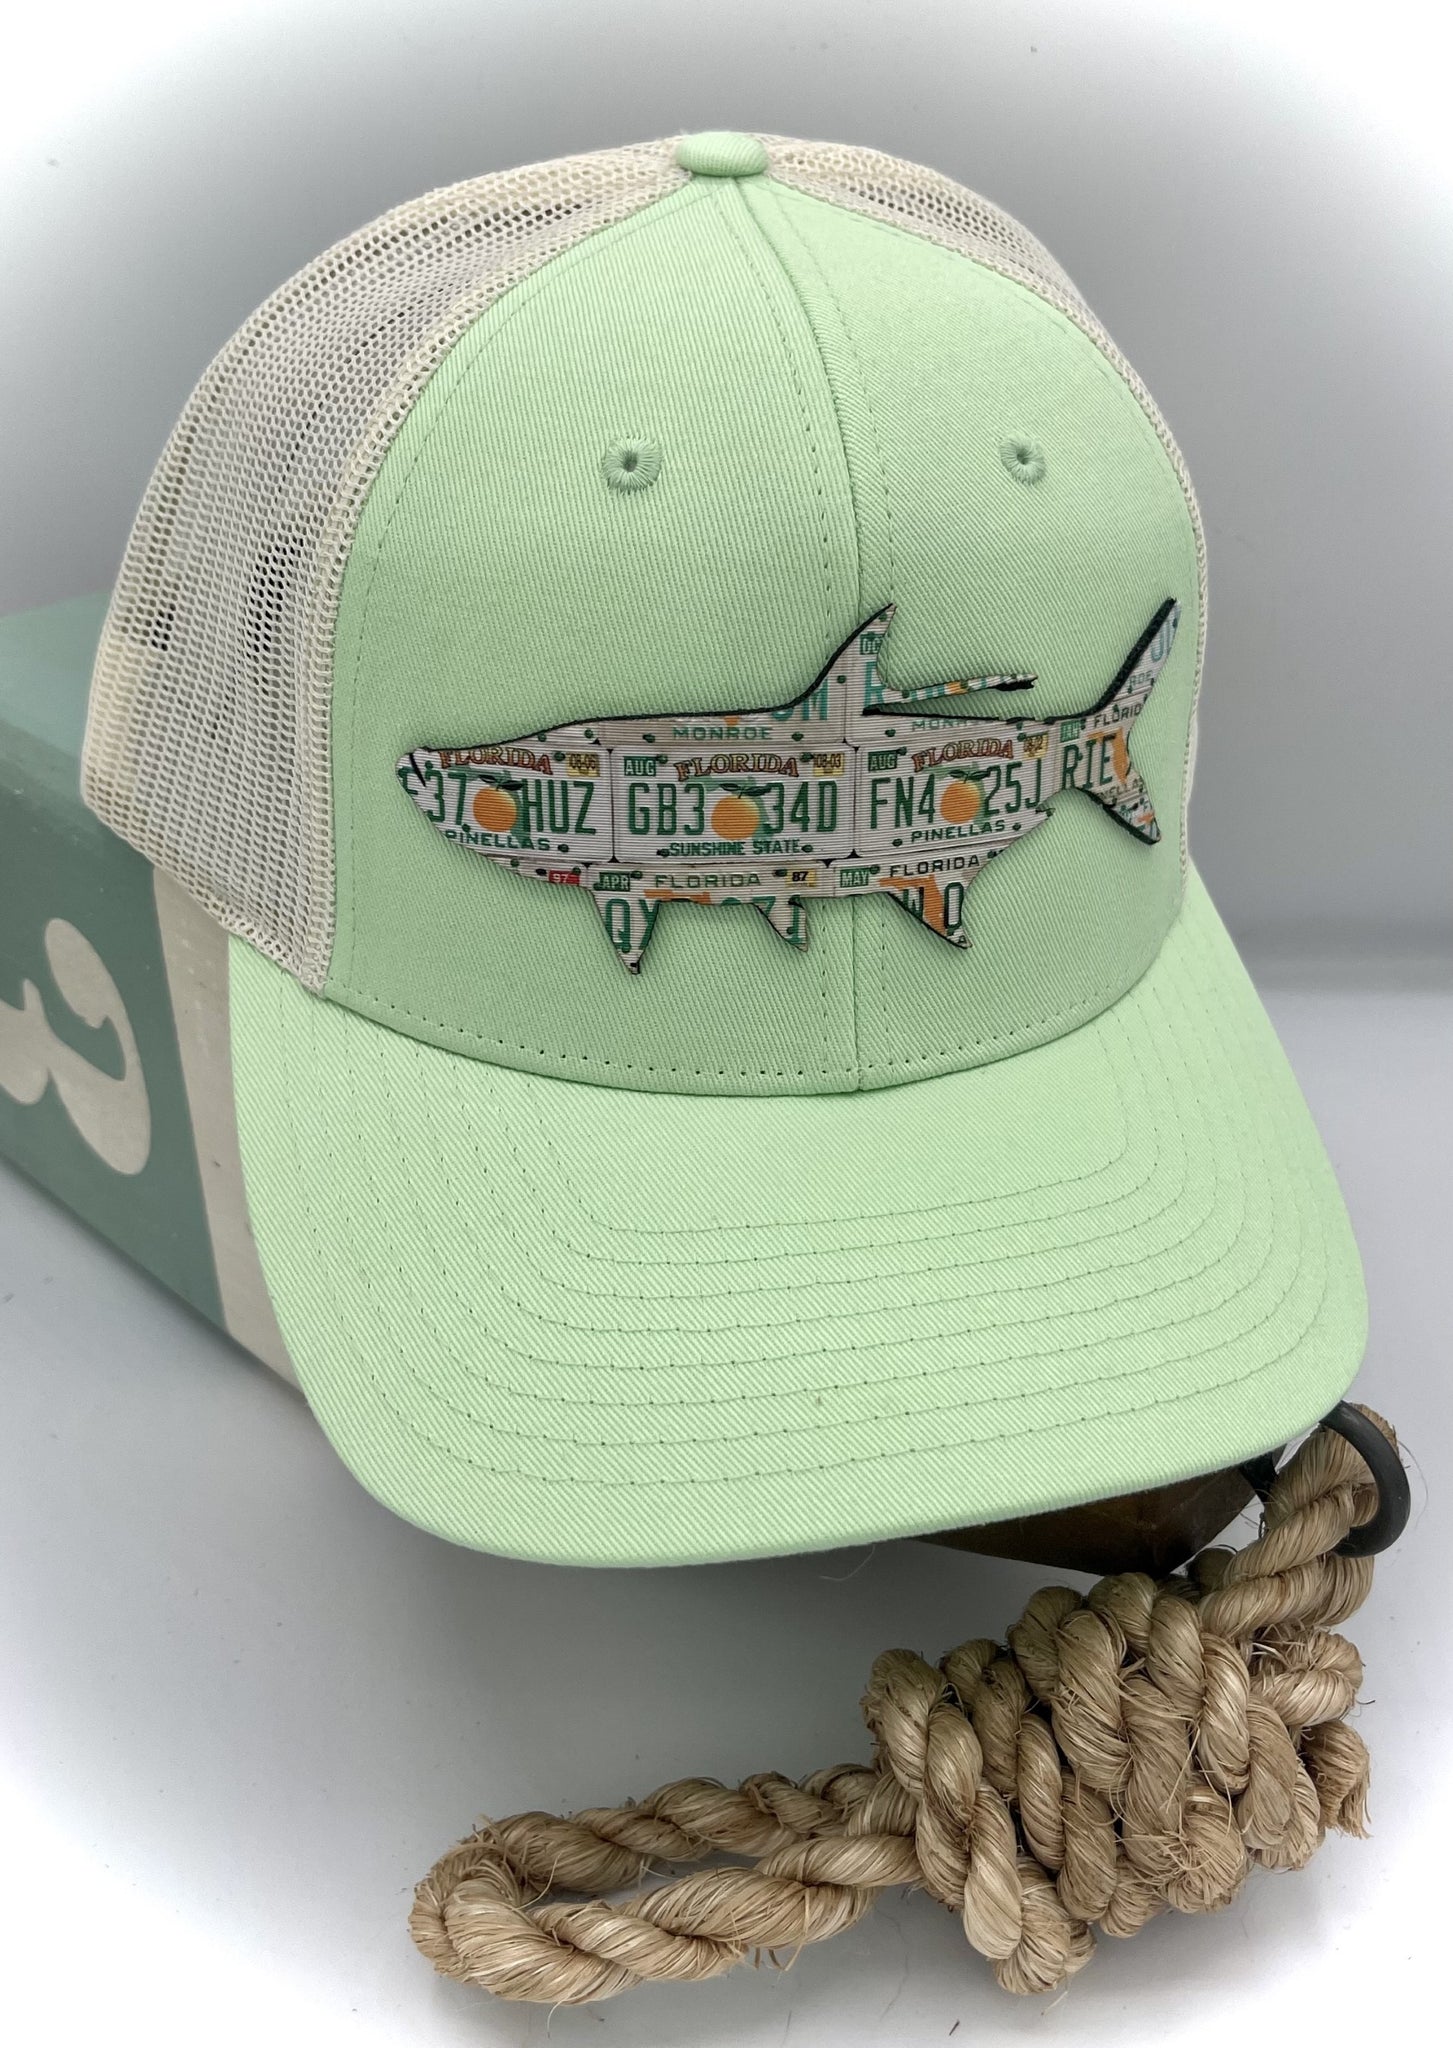 Florida Orange Tarpon Hat Collection – Cody's Fish